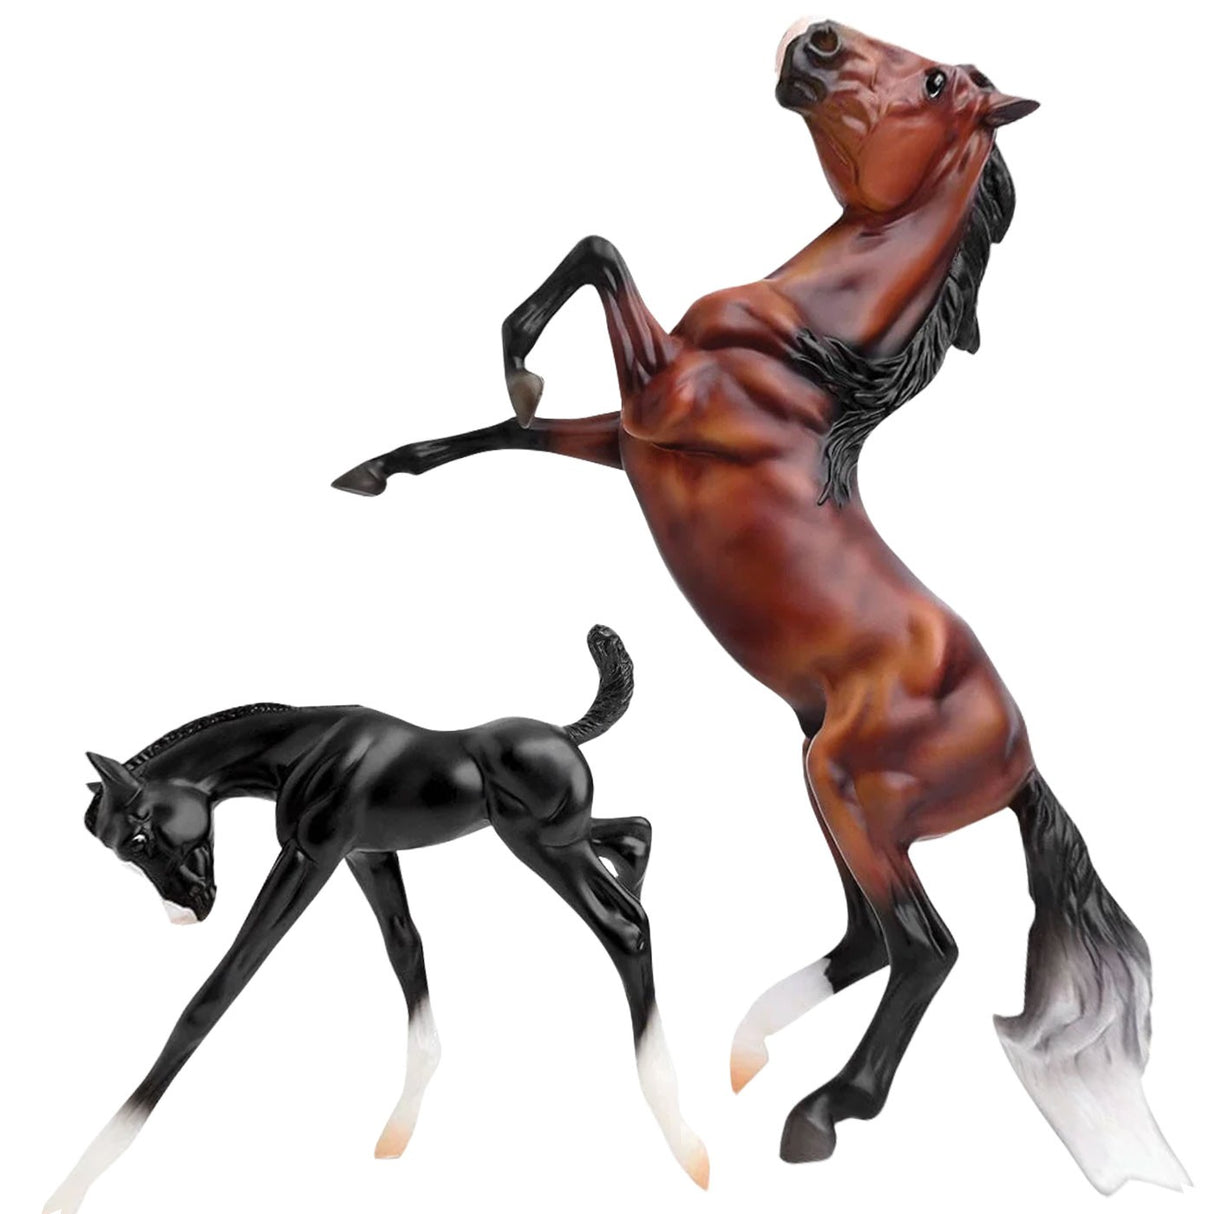 Breyer Stablemates Wild & Free Horse & Foal Set